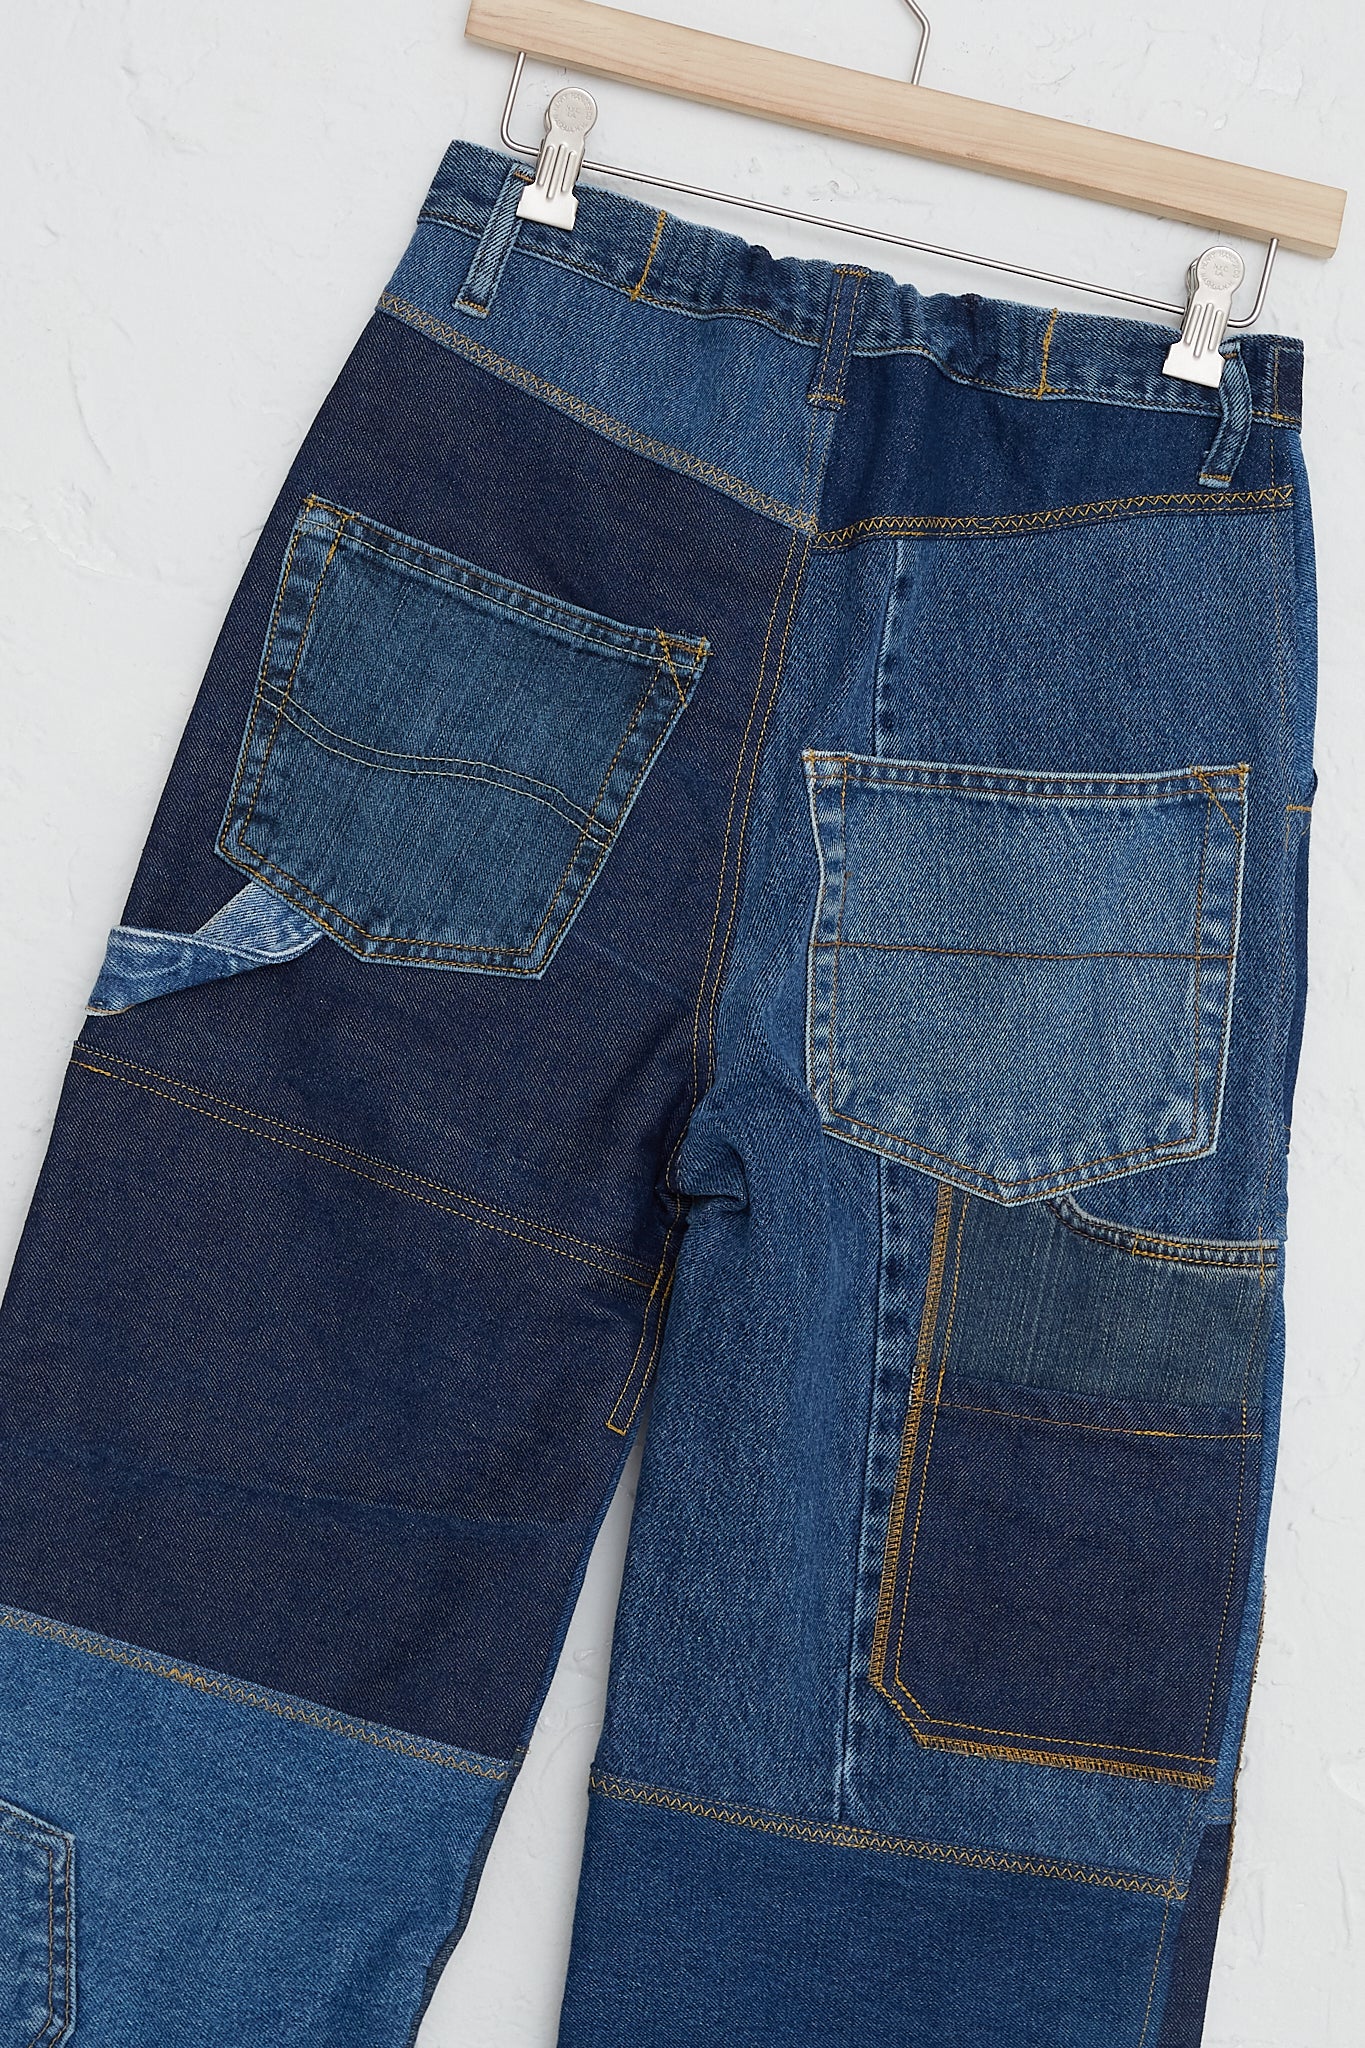 WildRootz - Reworked Jeans in Blue Variation B  - S back pocket detail